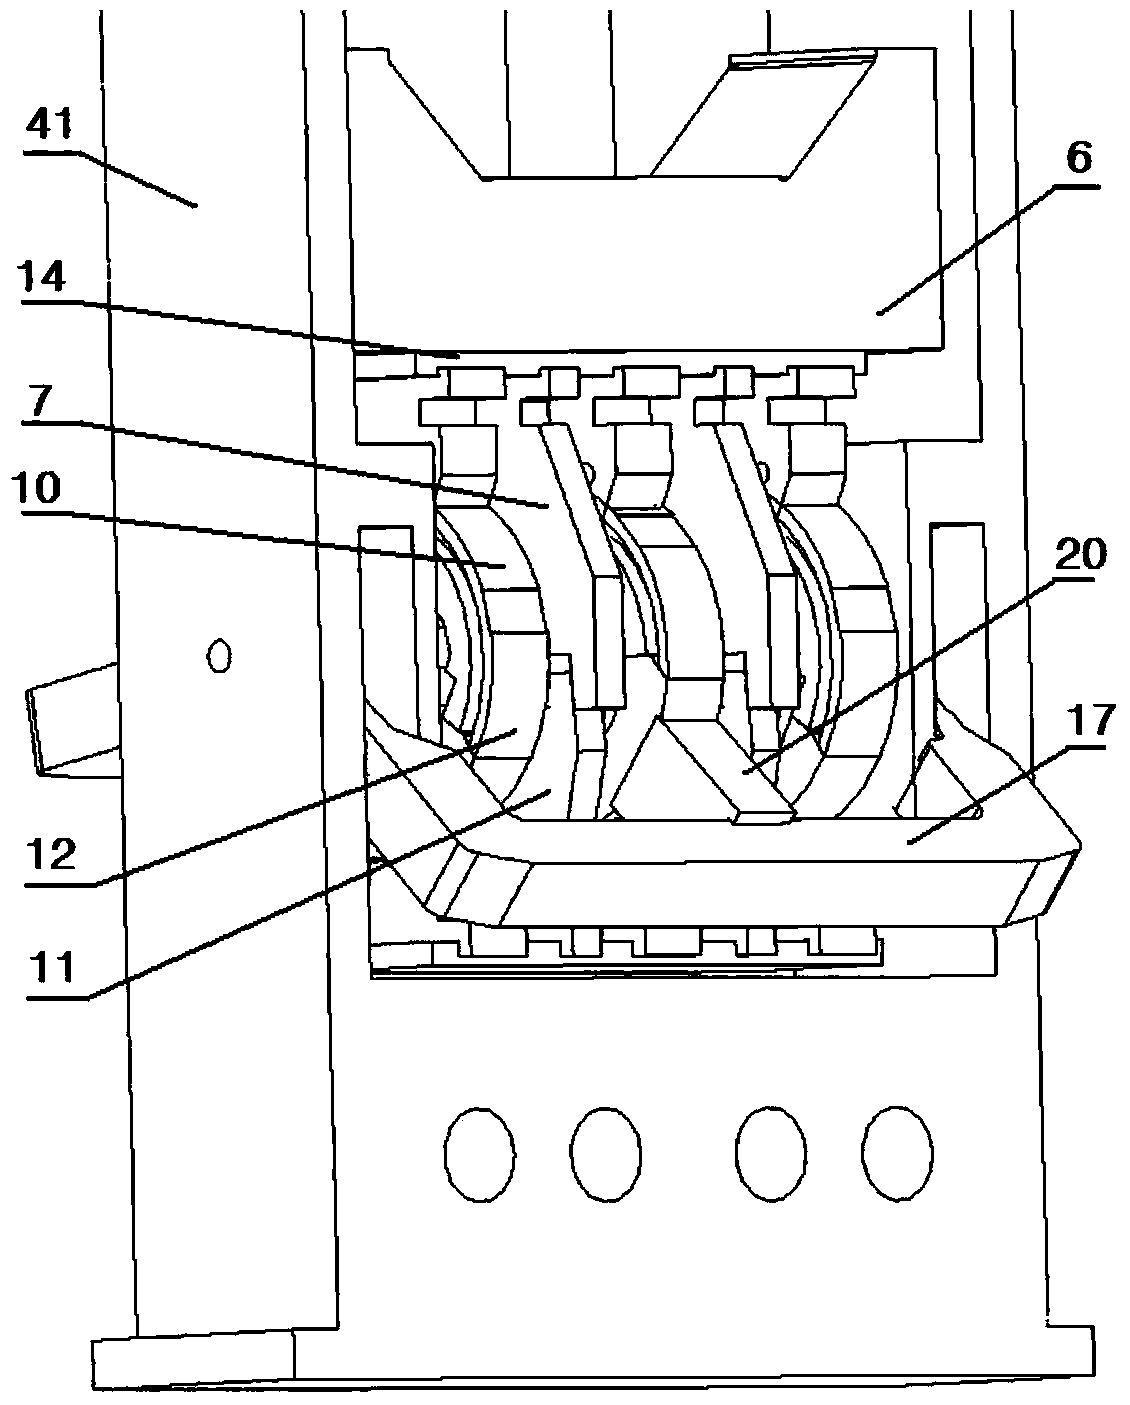 Special crankshaft multi-bend reversing machine